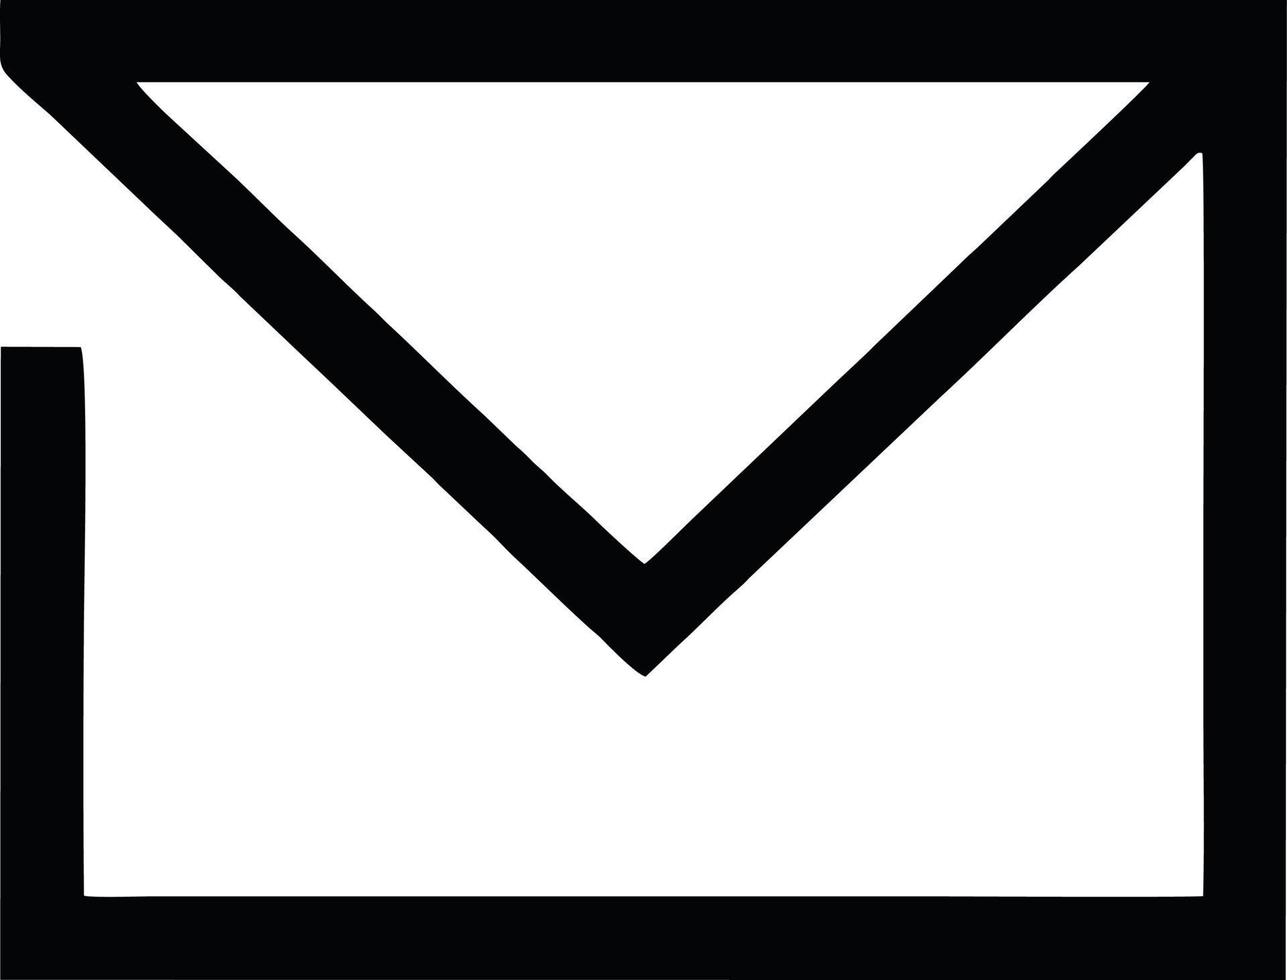 envelope icon in black vector image, illustration of envelope in black on white background, an envelope design on a white background